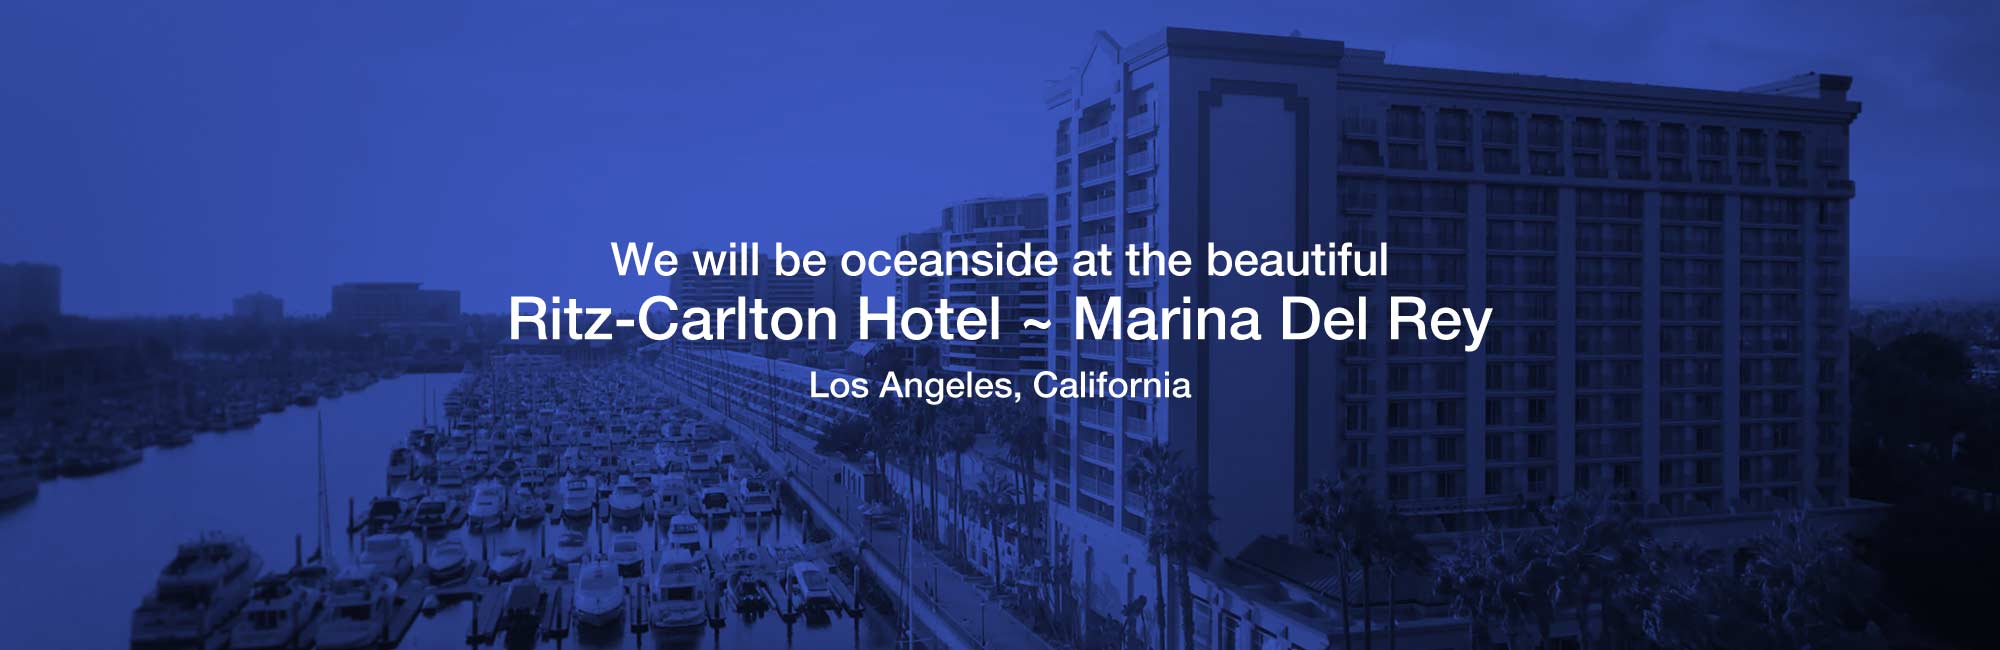 We will be oceanside at the beautiful Ritz-Carlton Hotel in Marina Del Rey Los Angeles, California